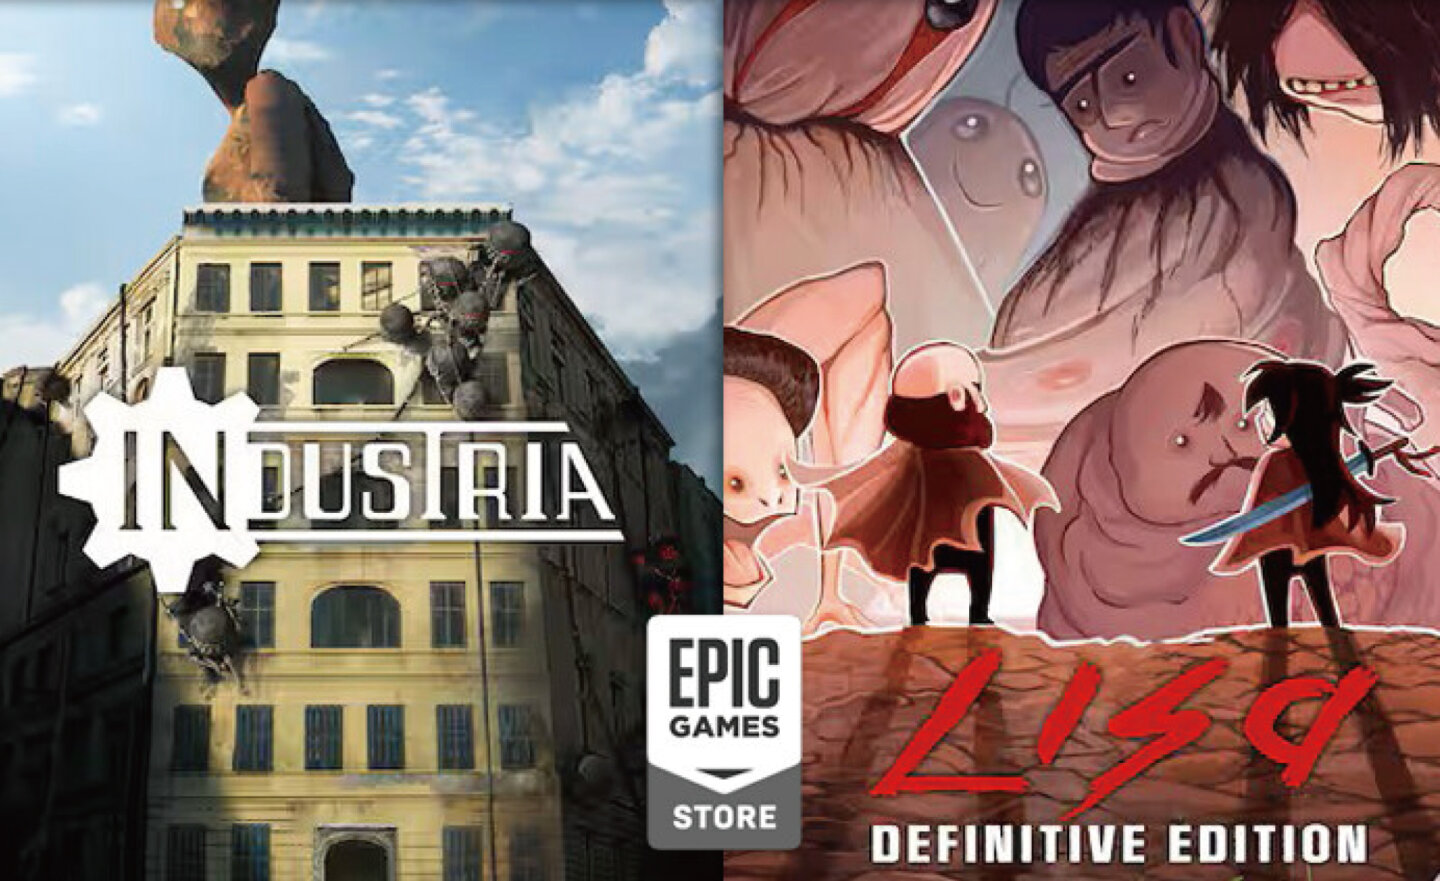 【限時免費】射擊遊戲《INDUSTRIA》、冒險 RPG《LISA: Definitive Edition》 放送中，2024 年 5 月 2 日深夜 23:00 截止